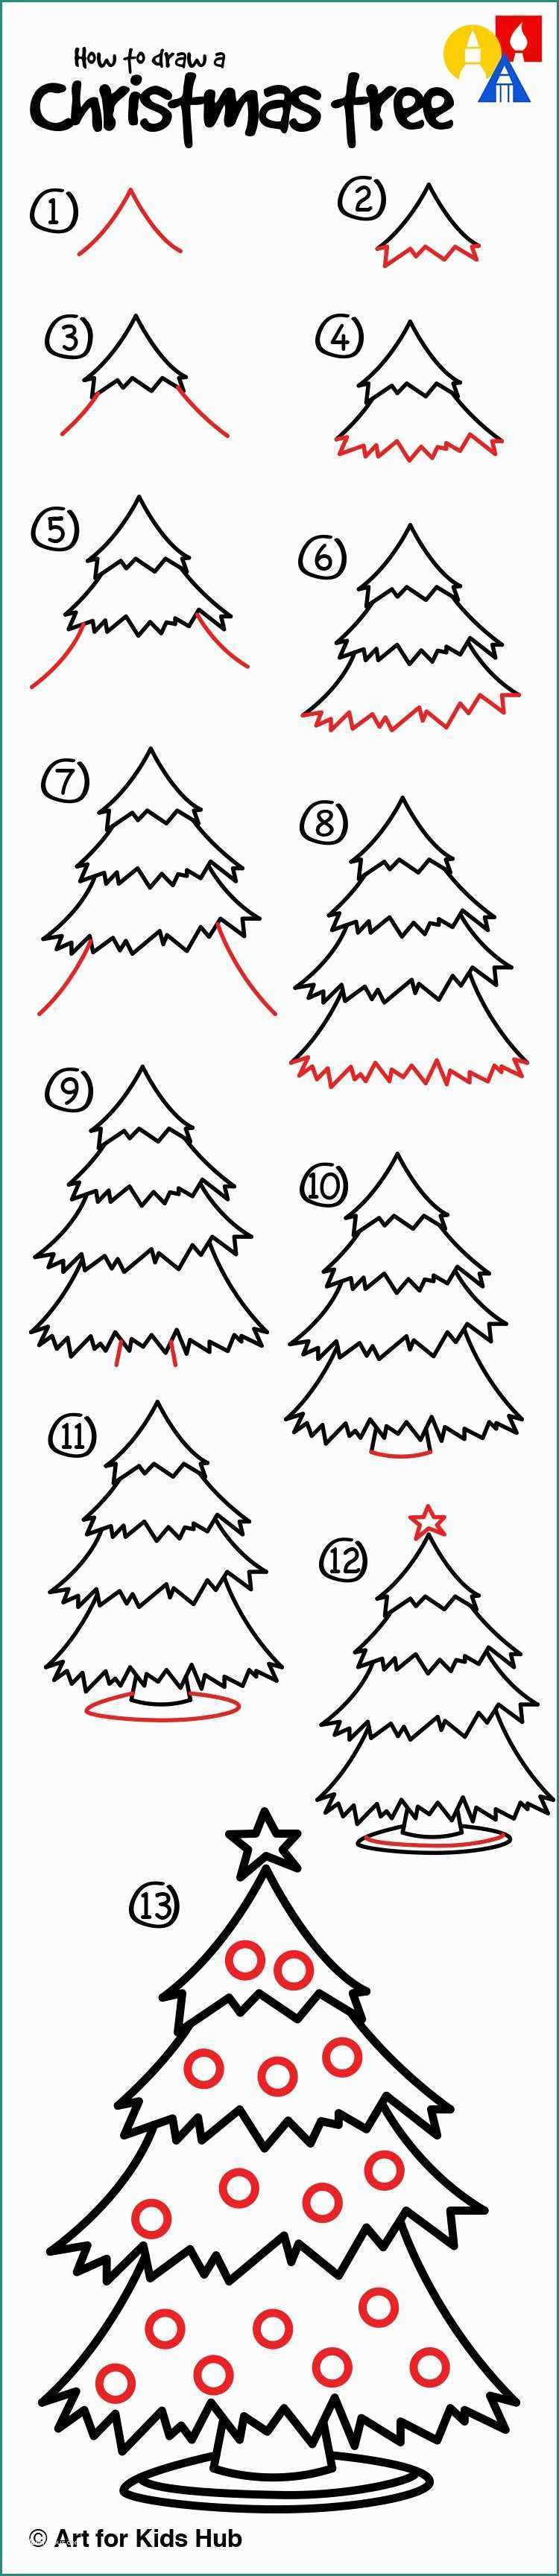 Nail Art Facilissime E How to Draw A Christmas Tree Art for Kids Hub